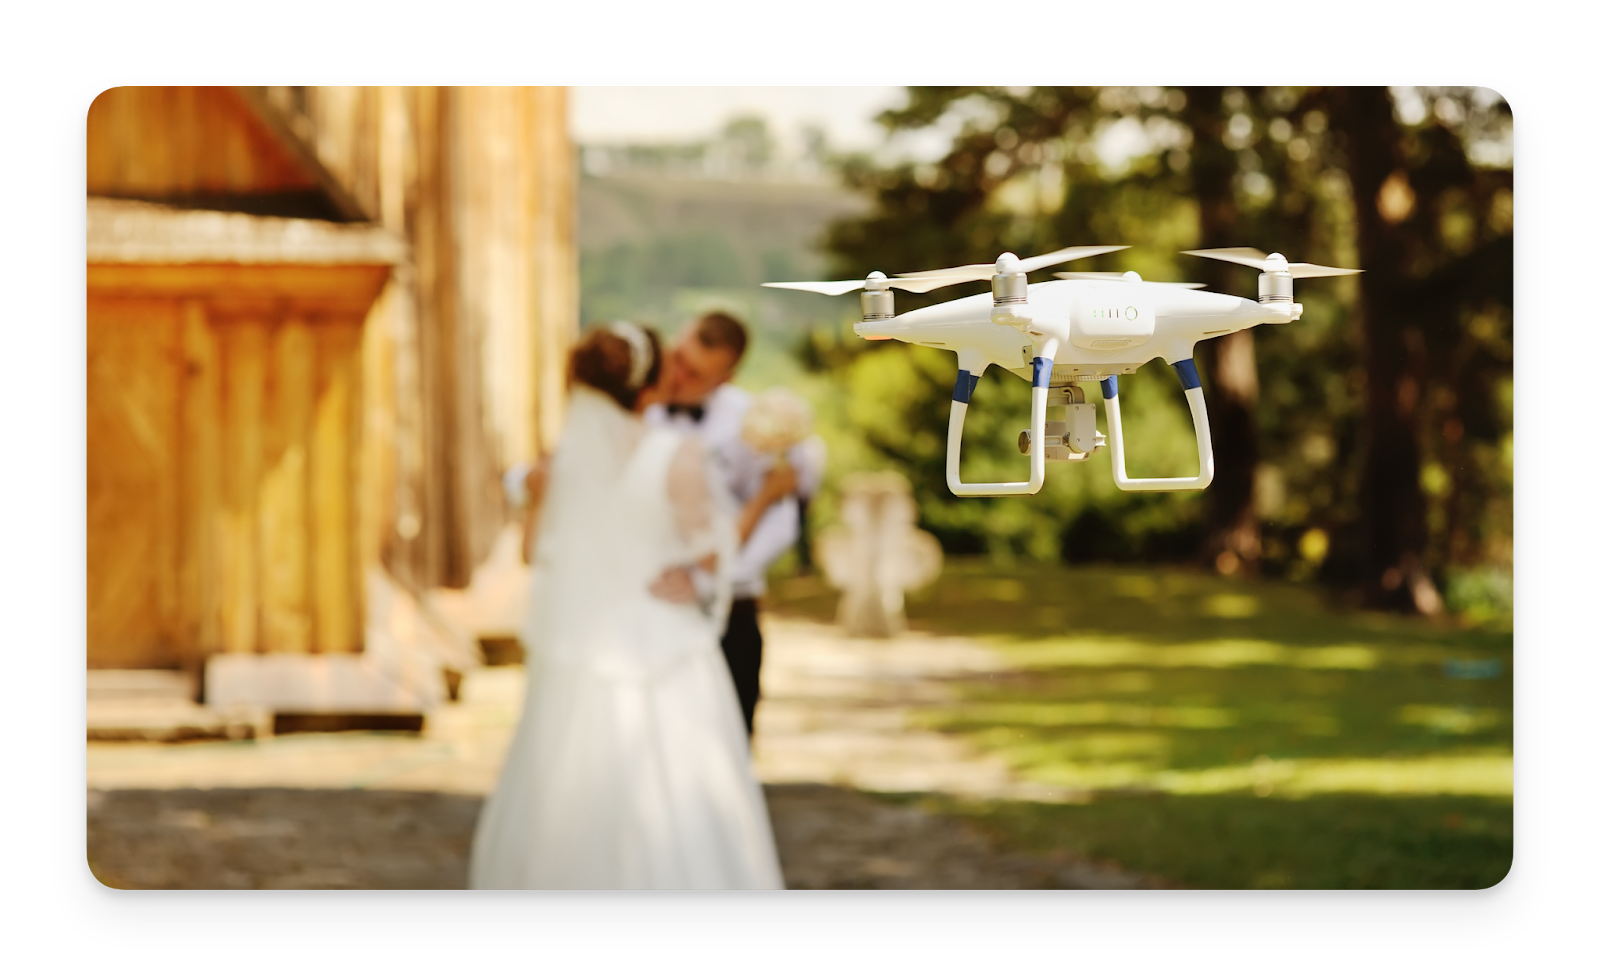 A drone capturing a wedding.